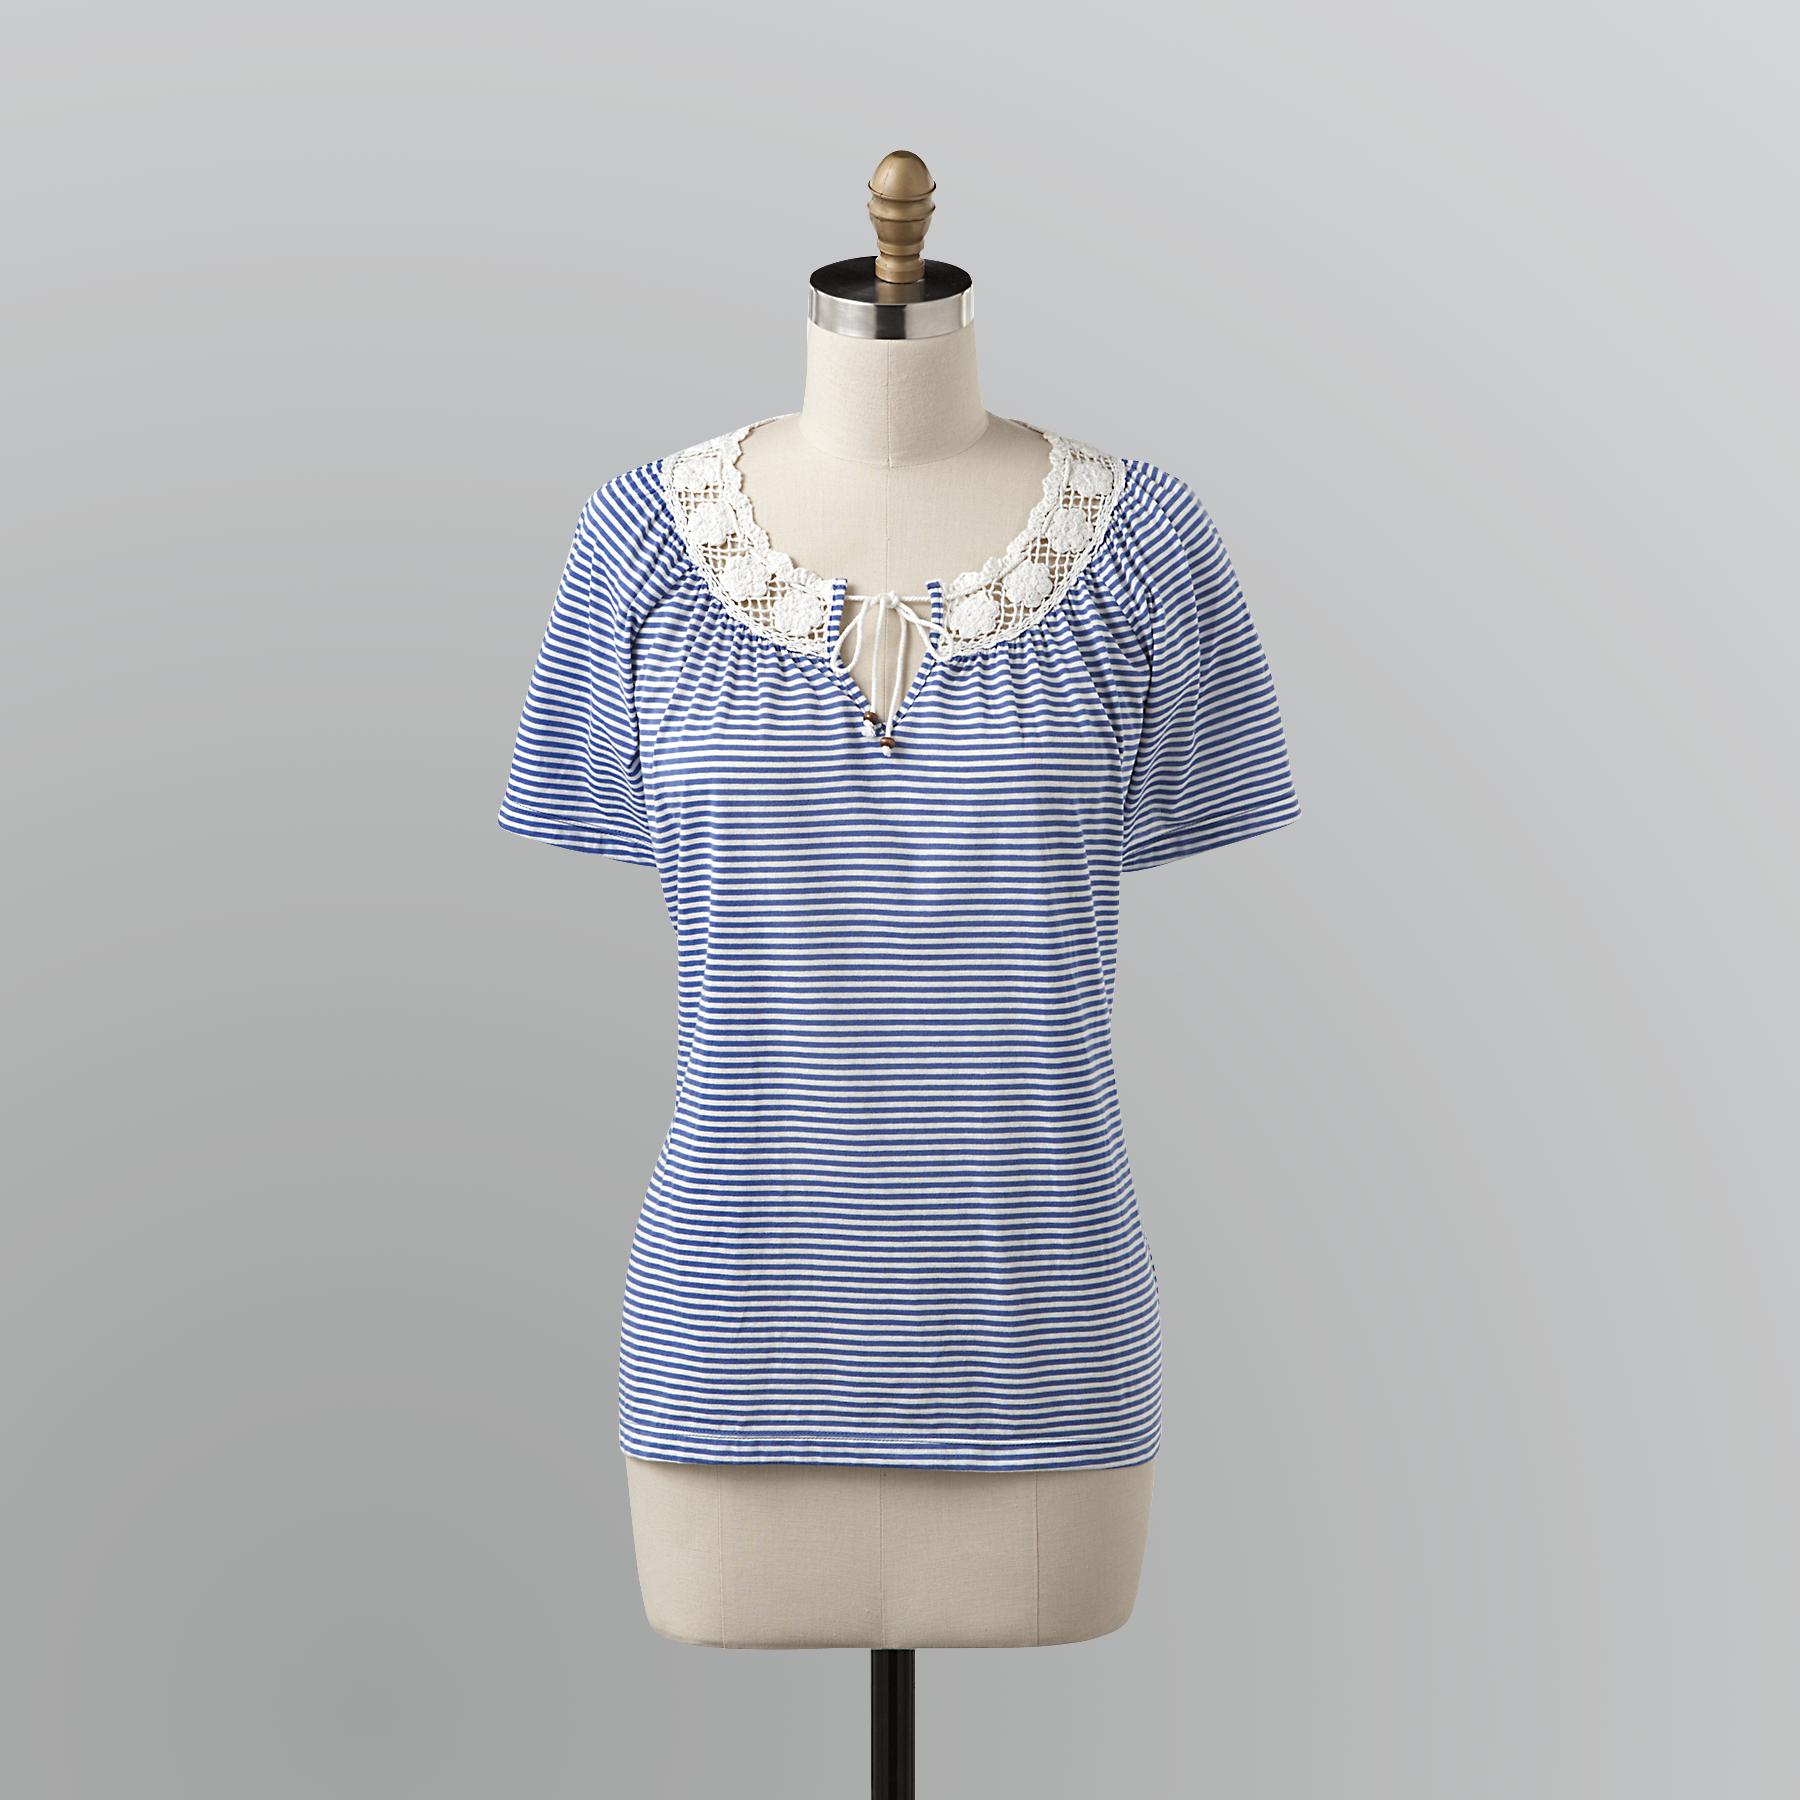 Basic Editions Women's Crocheted Neck T-Shirt